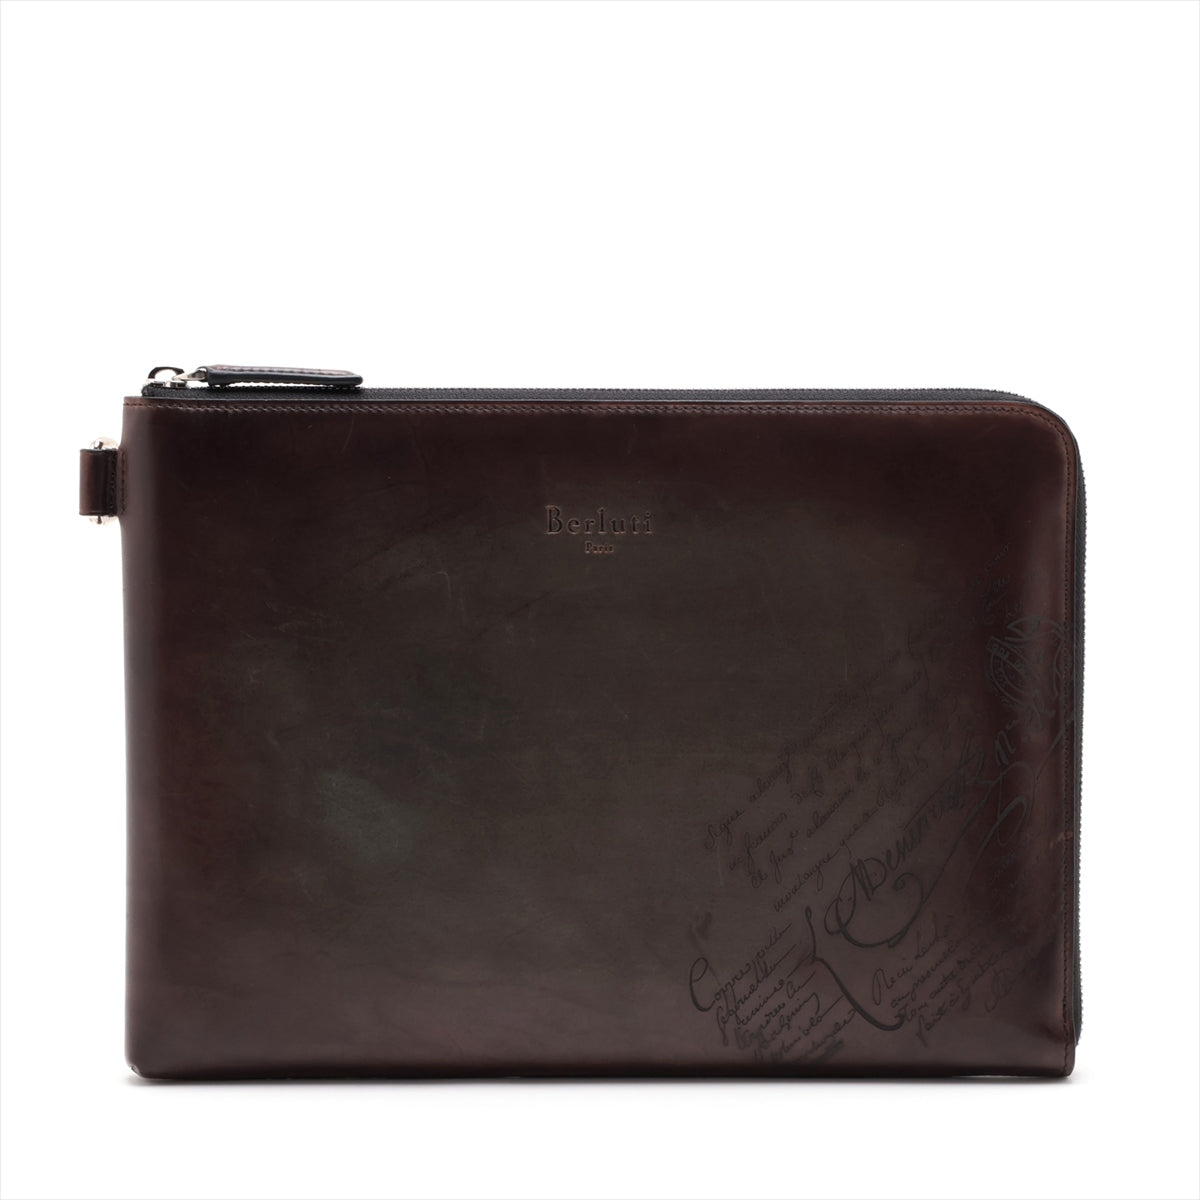 Berluti Calligraphy Leather Clutch bag Brown｜zz017699｜ALLU UK